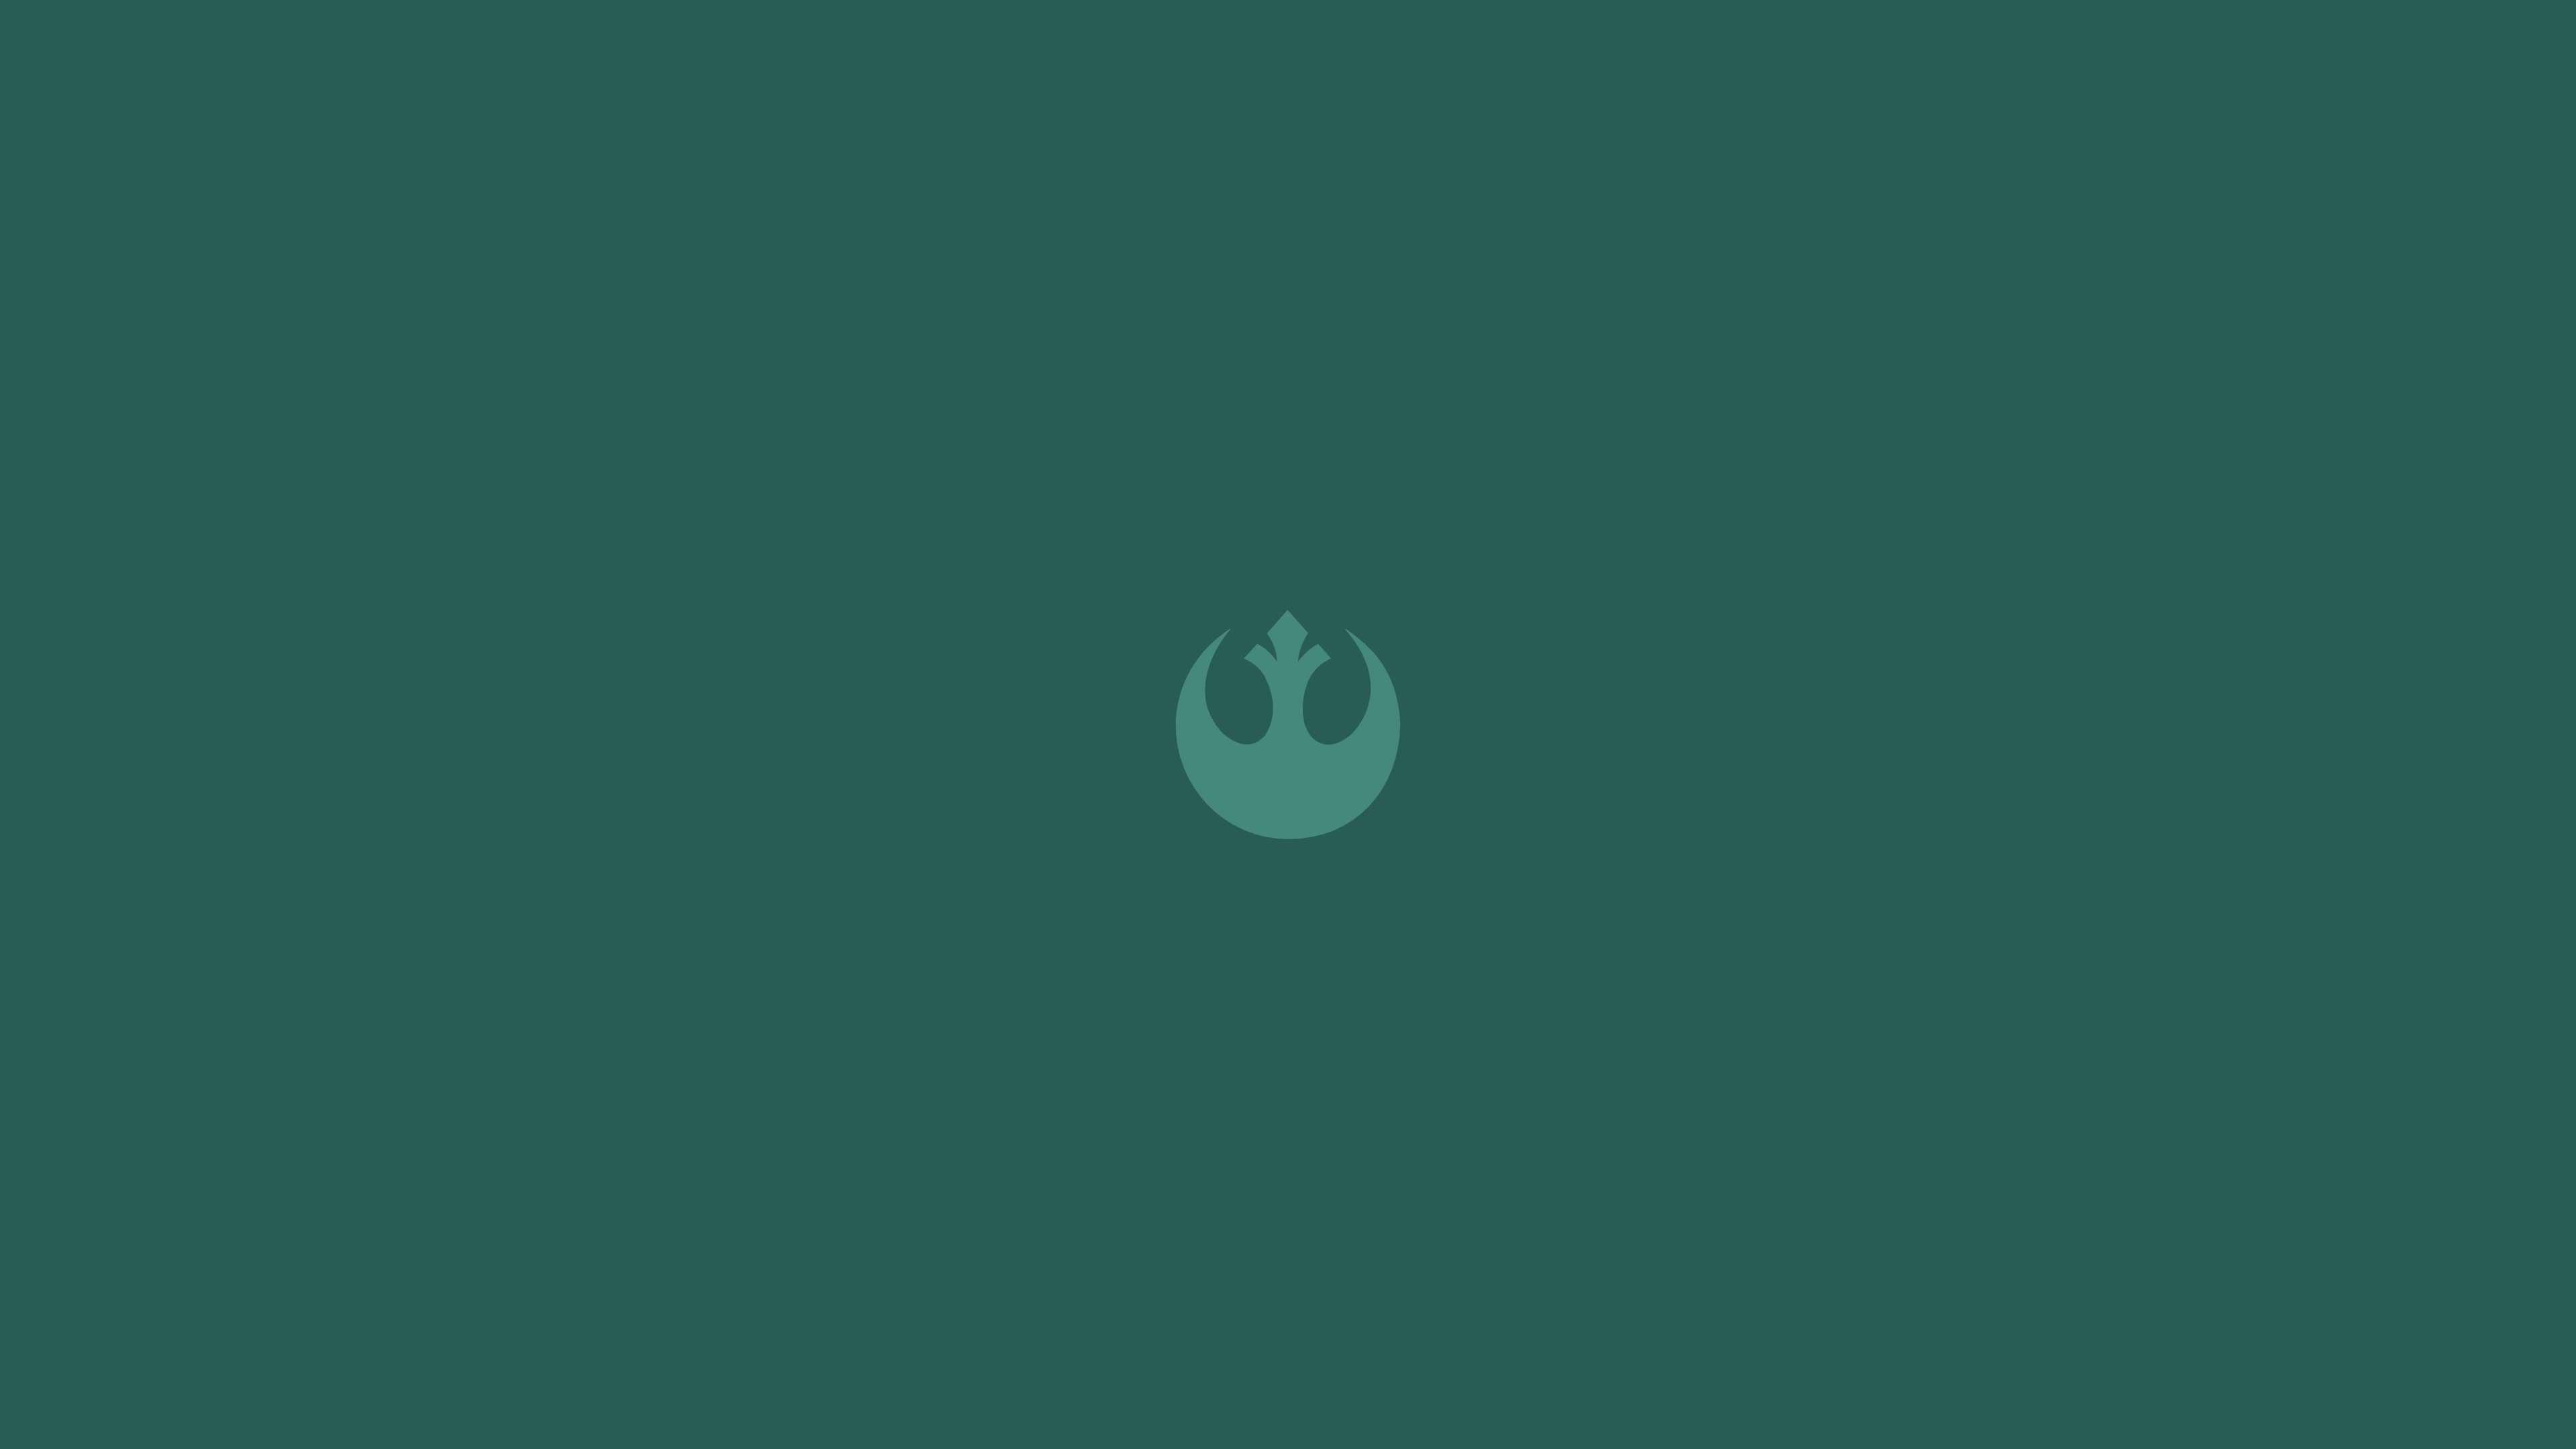 4K, Star Wars, Rebel Alliance, minimalism Gallery HD Wallpaper